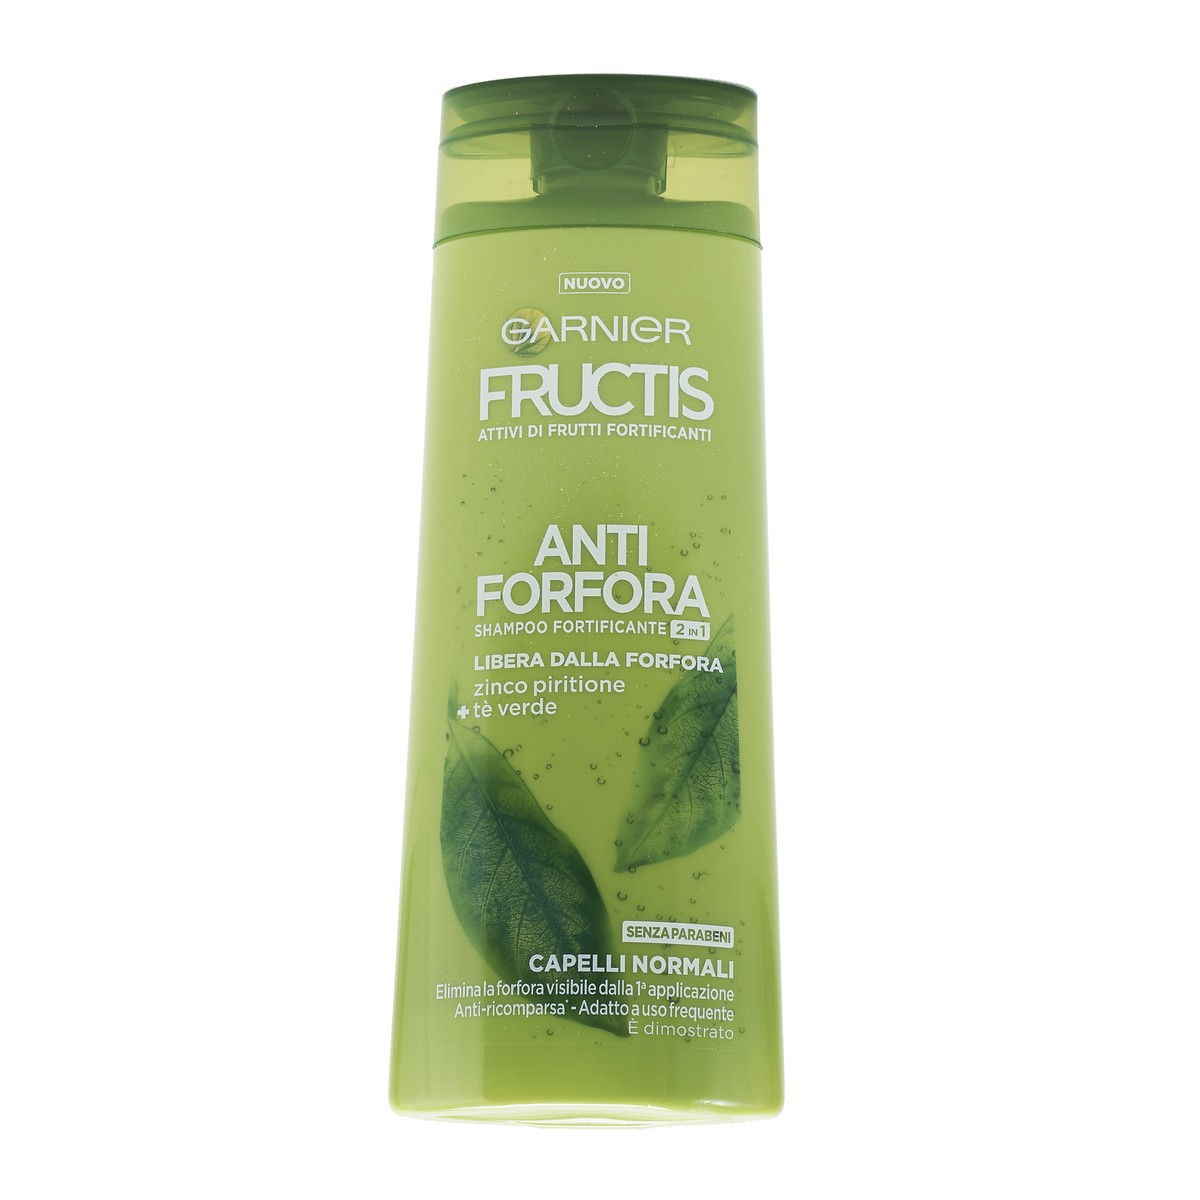 Garnier Fructis Shampoo fortificante 2in1 Anti Forfora